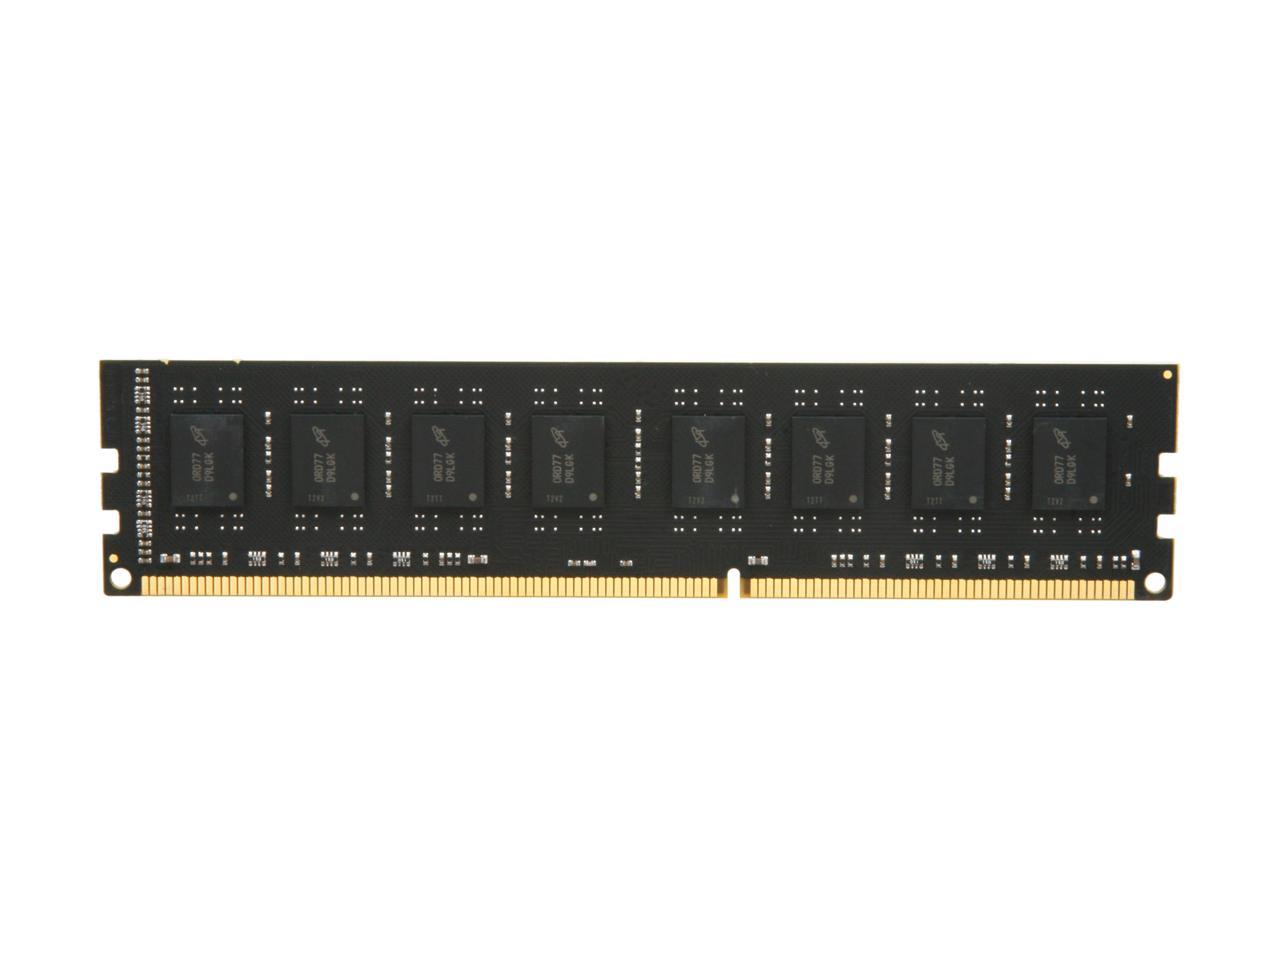 G.SKILL Value Series 4GB 240-Pin DDR3 SDRAM DDR3 1333 (PC3 10600) Desktop Memory Model F3-10600CL9S-4GBNT